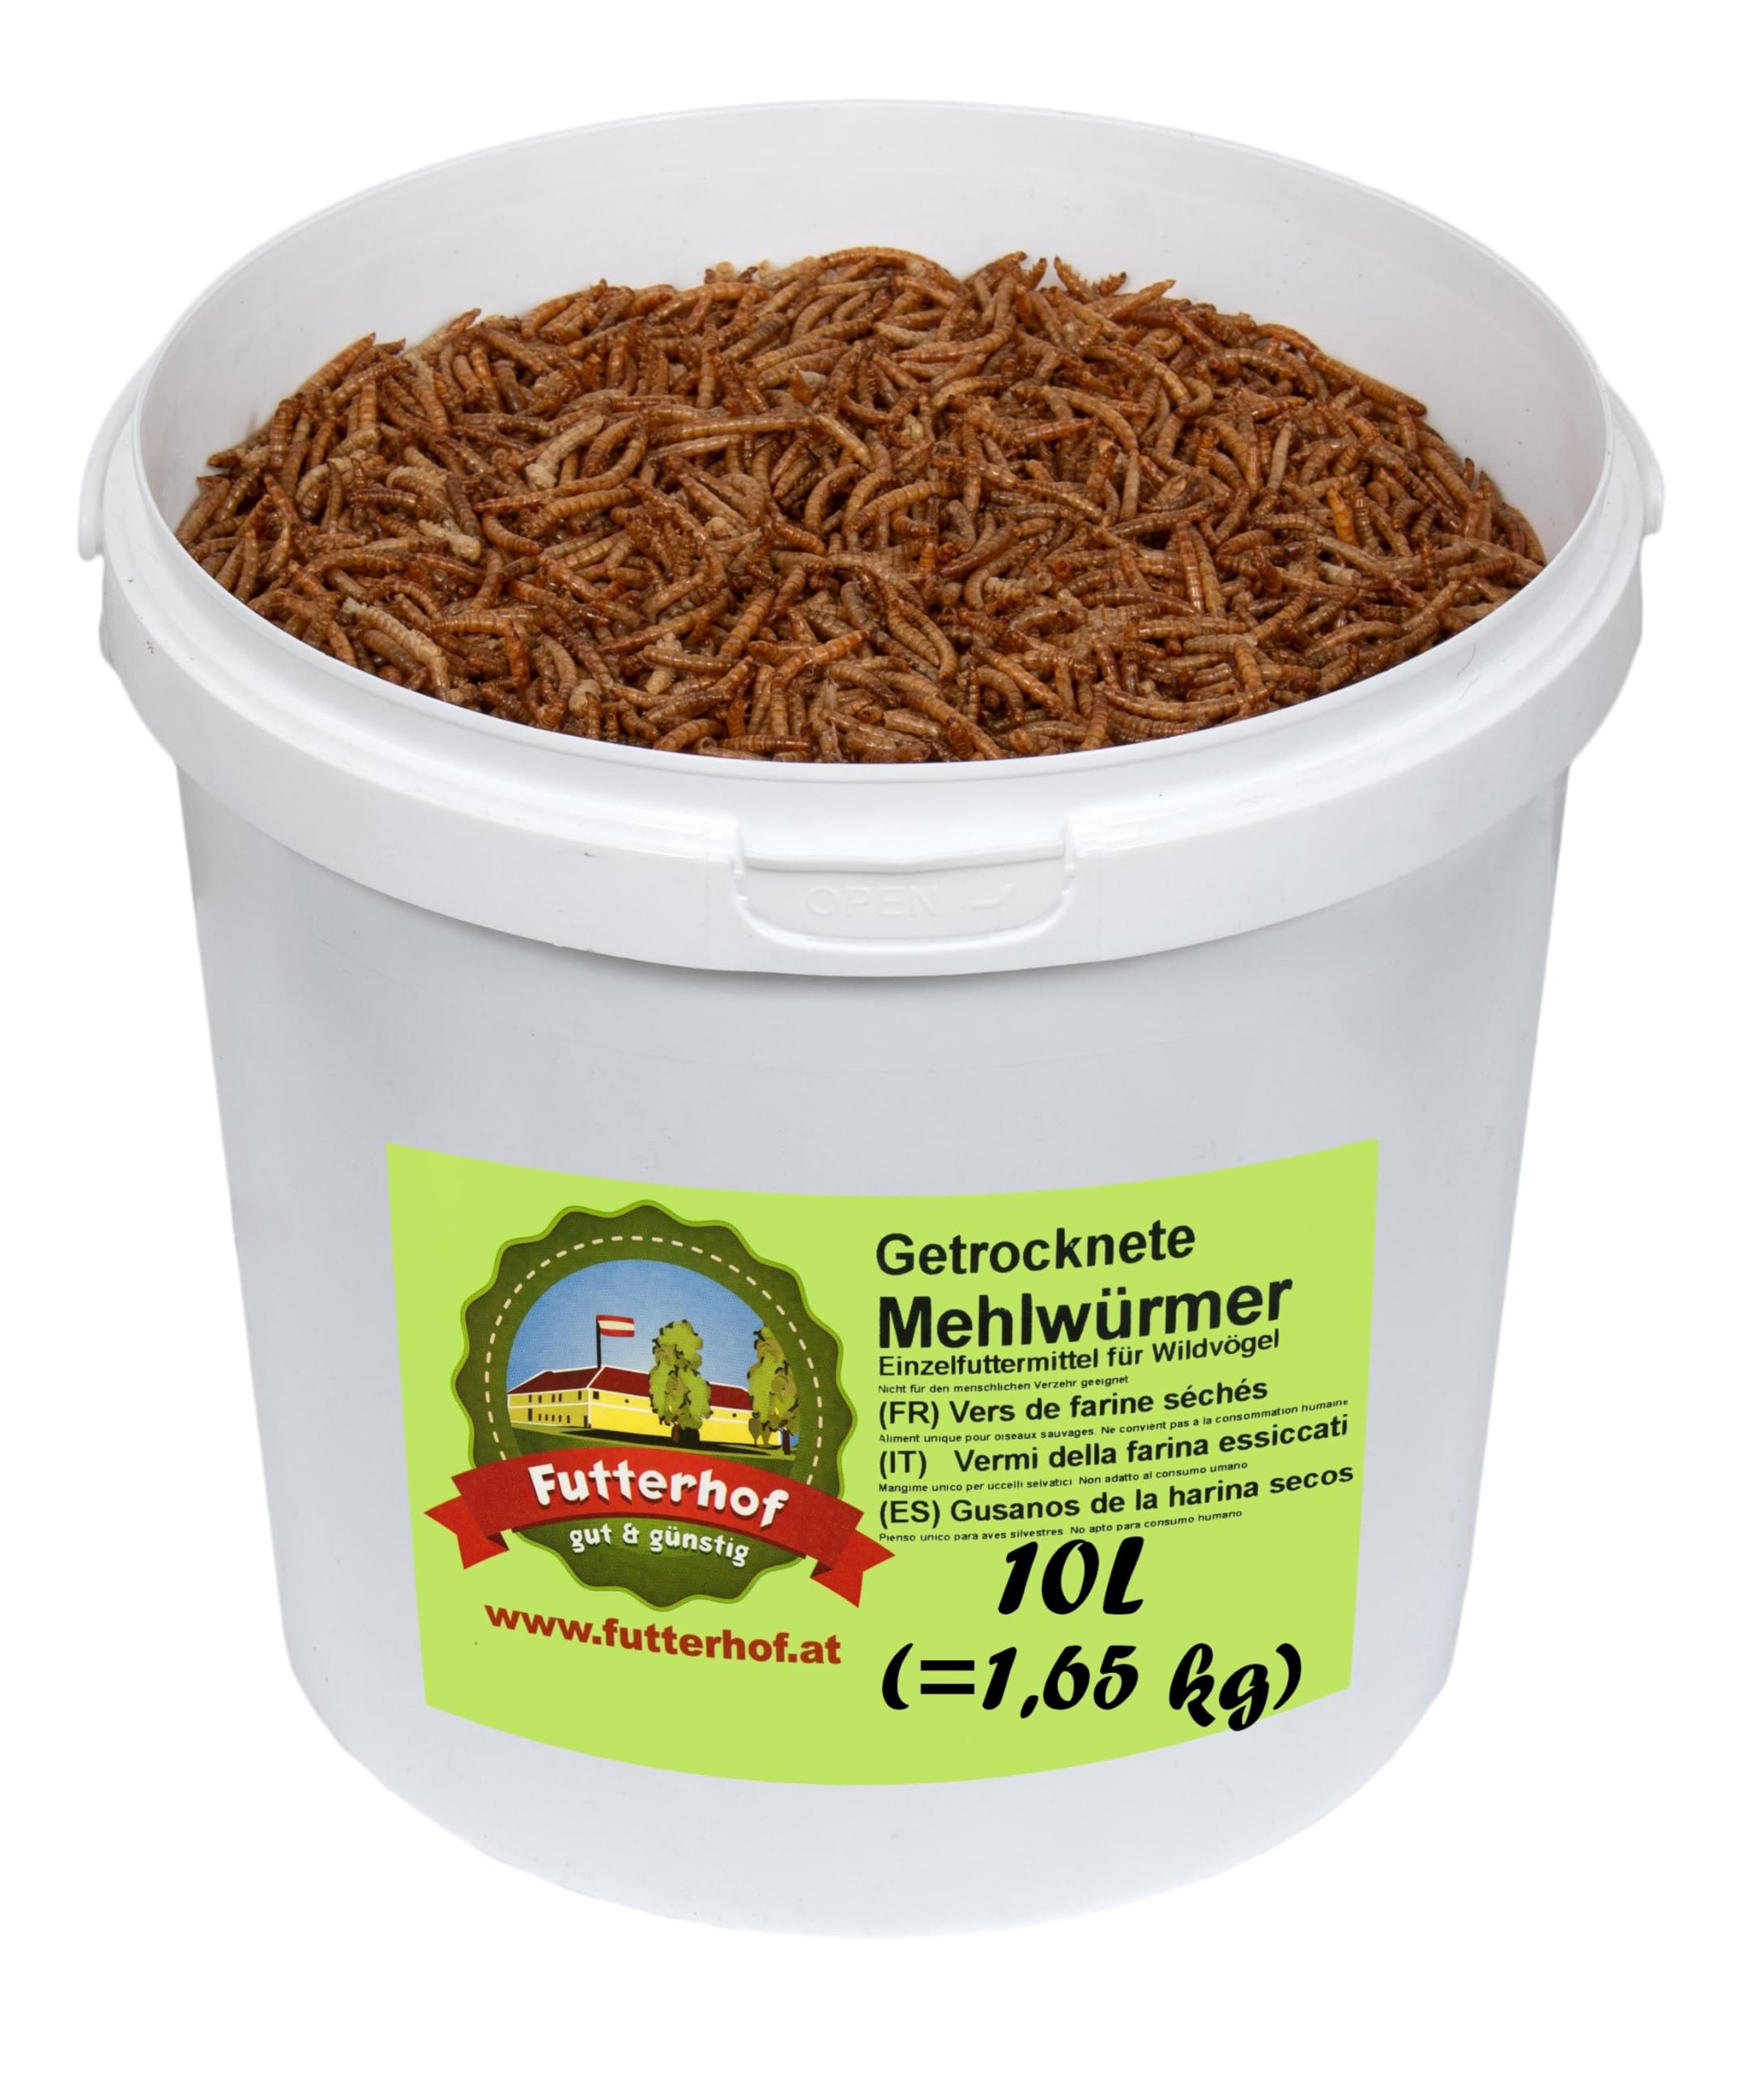 Futterhof getrocknete Mehlwürmer 10 L Eimer (= 1,65 kg), Premium Qualität